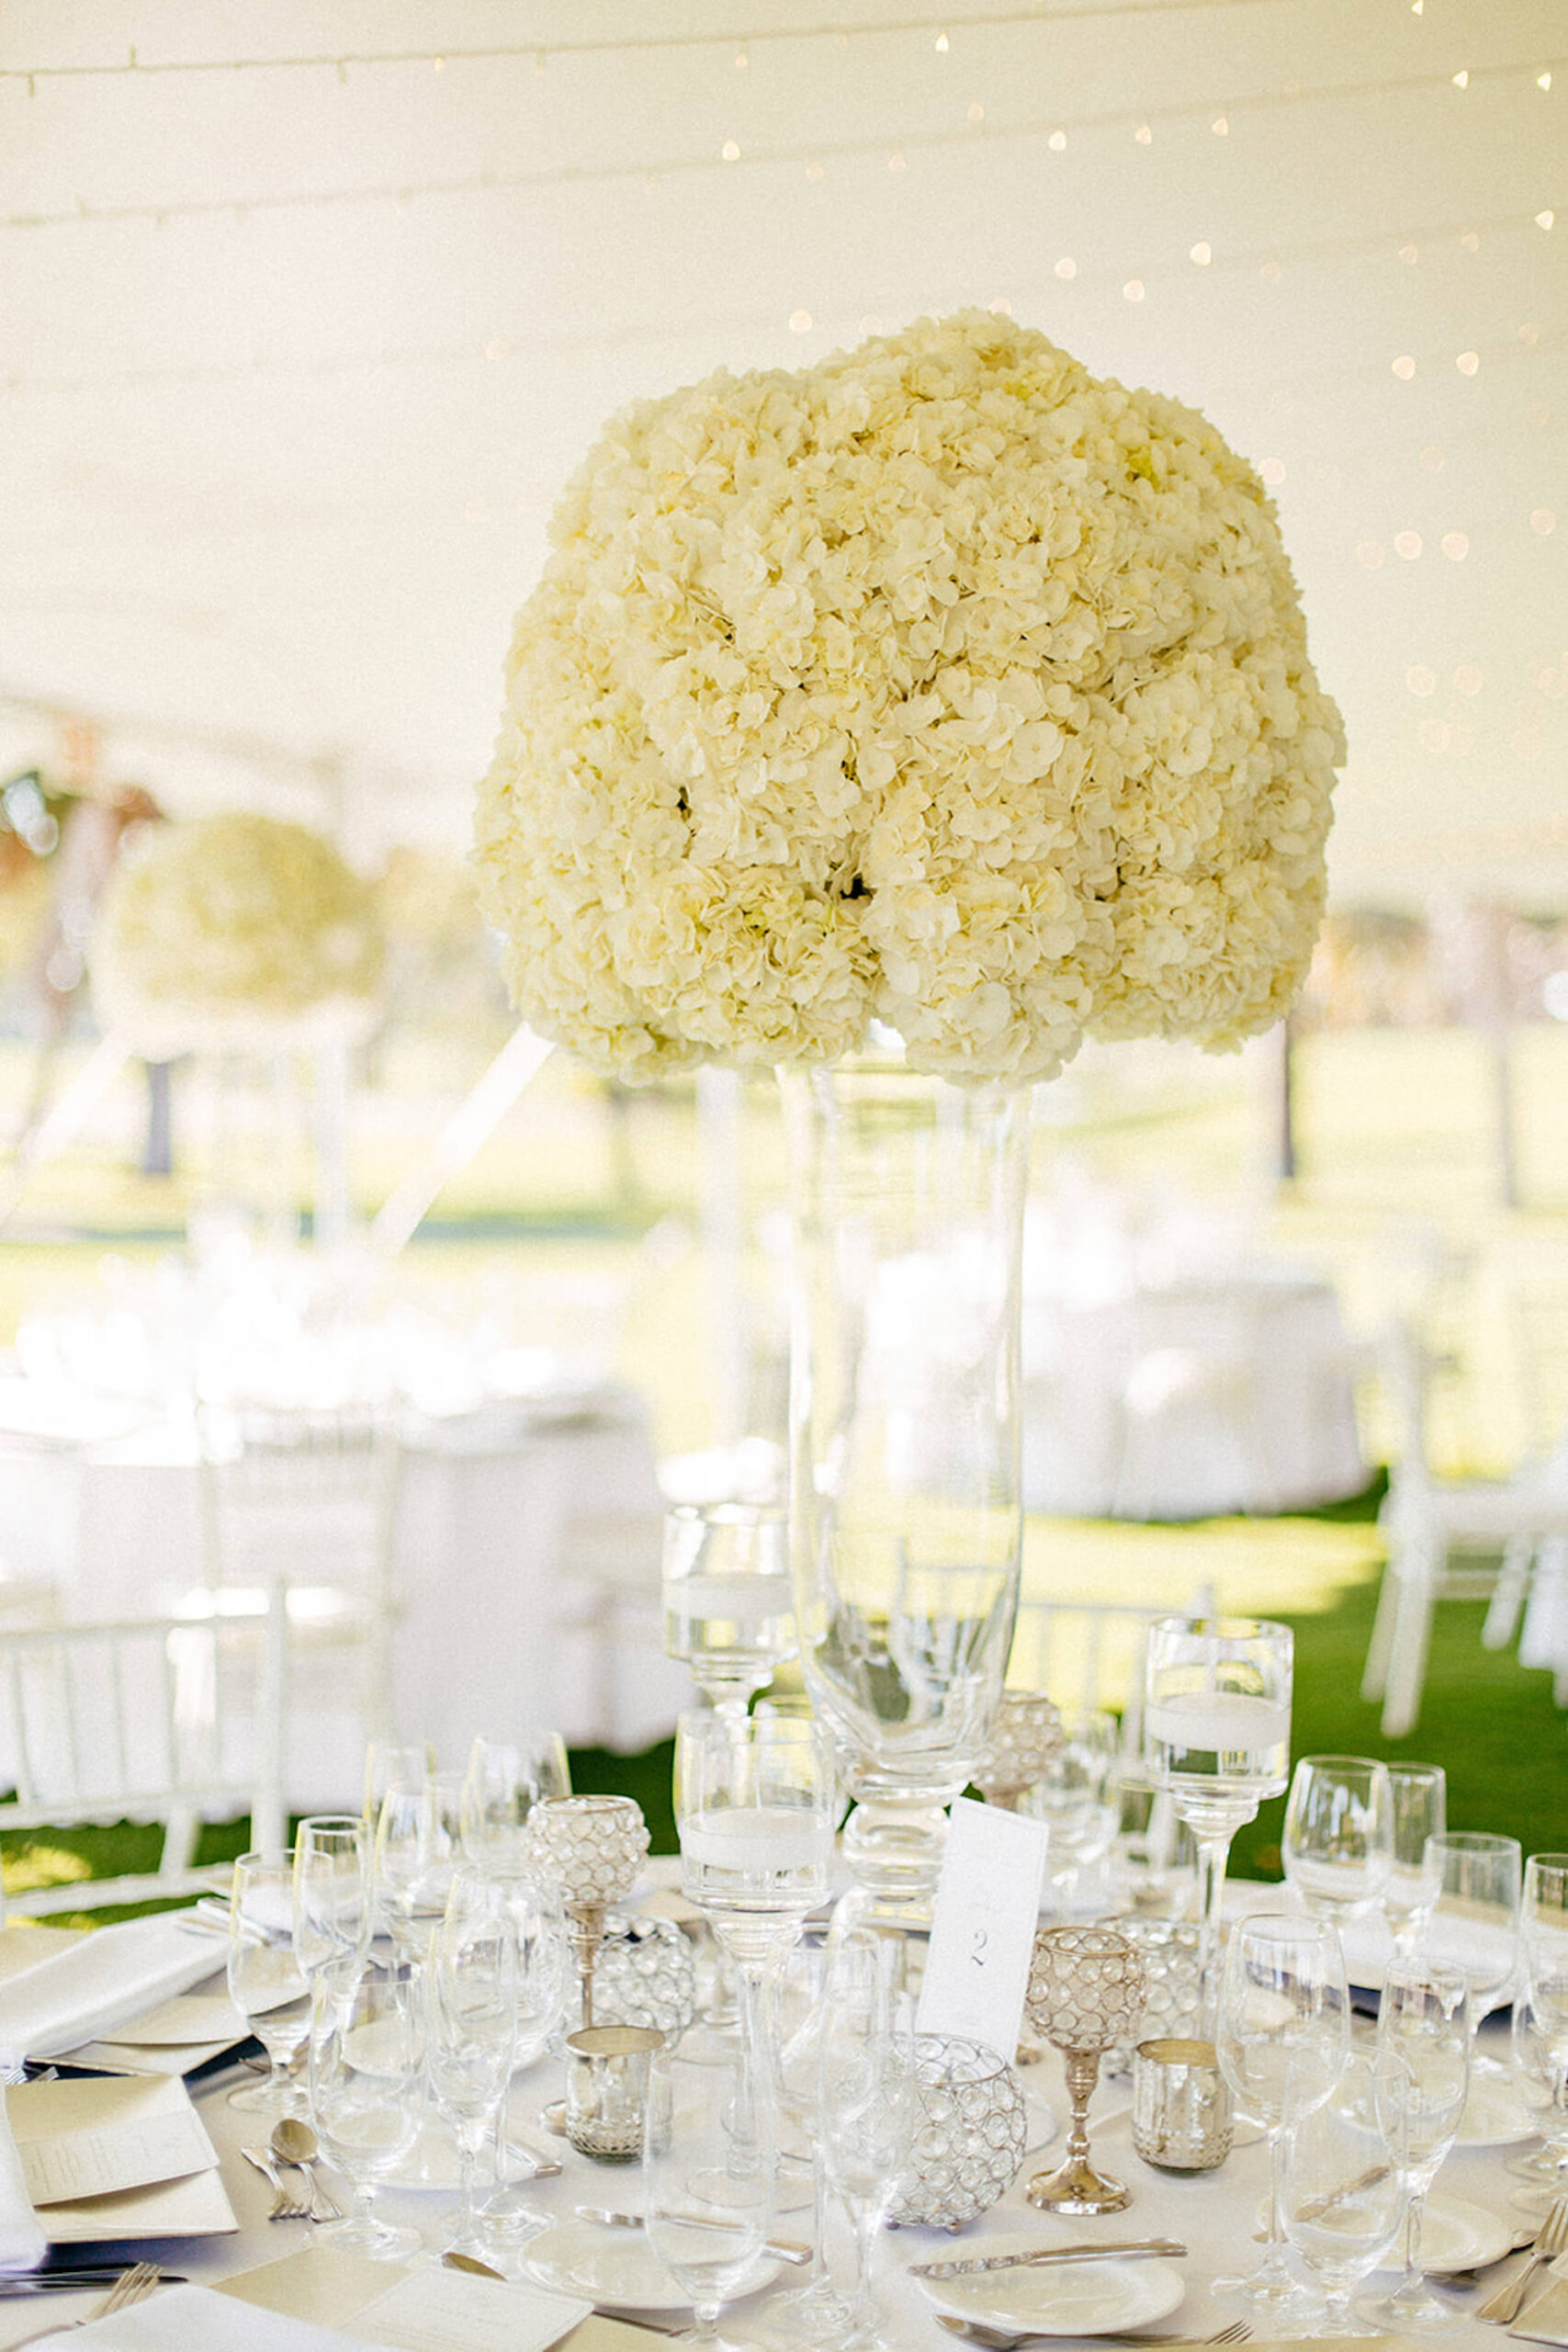 Modern Elegant Outdoor Tent Wedding Reception Decor, White Chiavari Chairs, Tall White Hydrangeas Floral Centerpieces, Hanging String Lights | Tampa Bay Wedding Venue The Resort at Longboat Key Club